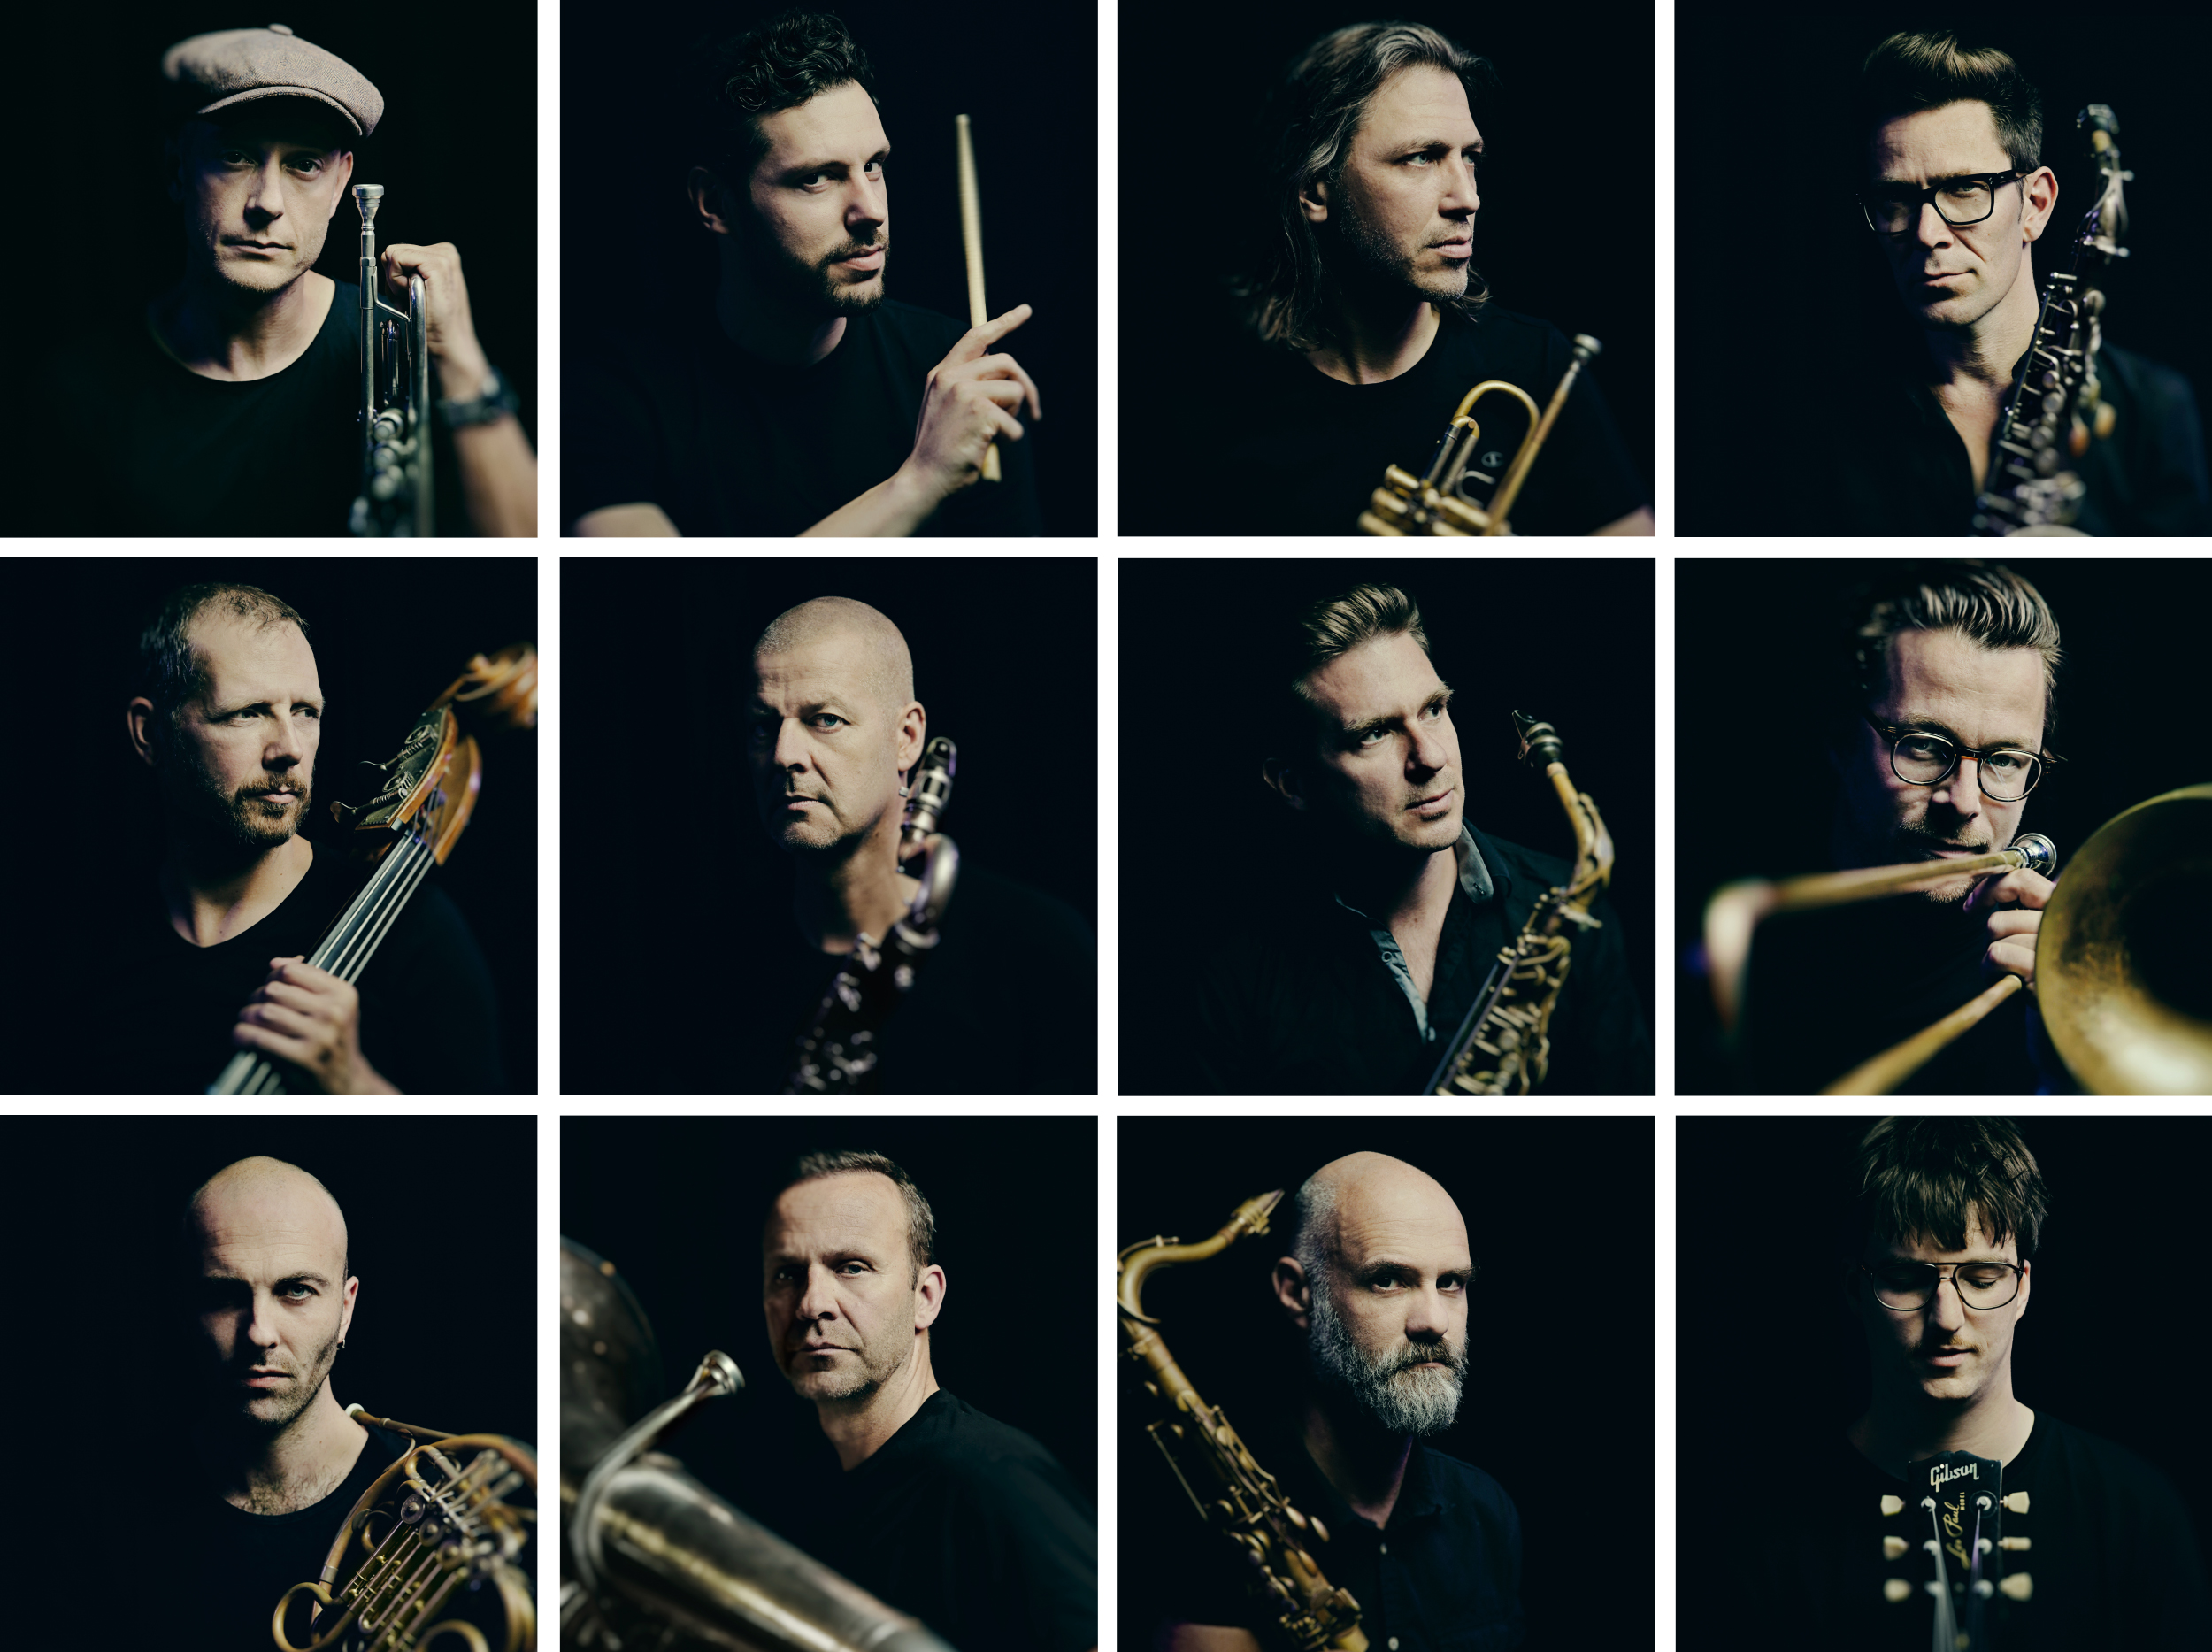  New Rotterdan Jazz Orchestra promofoto. 